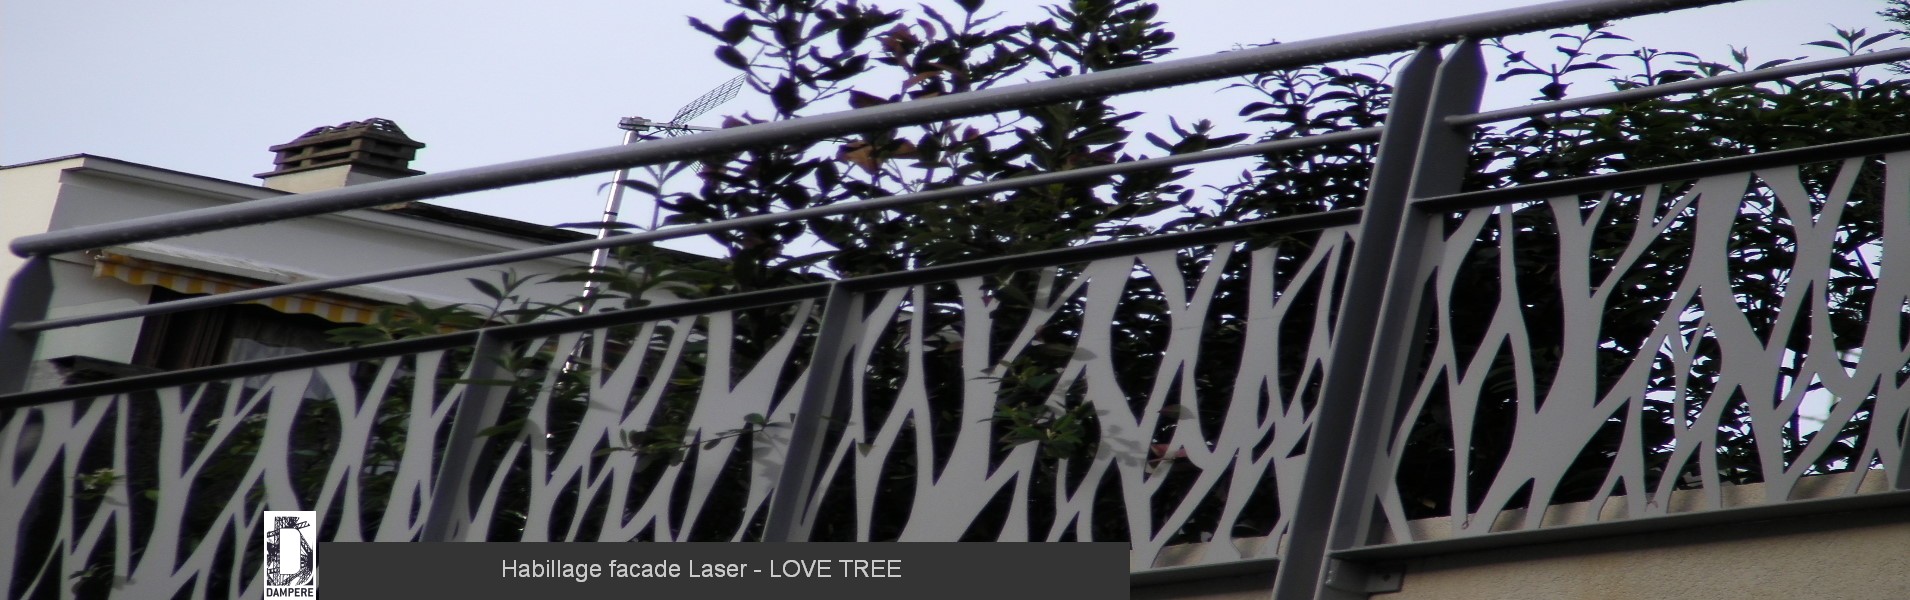 Habillage facade Laser LOVE TREE 2